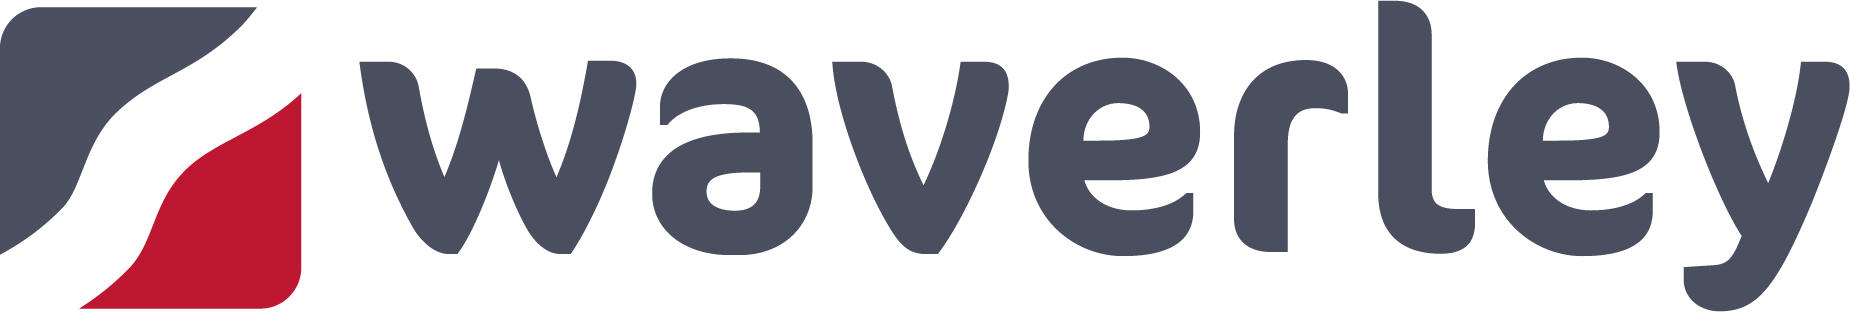 Wvrly Logo L 1